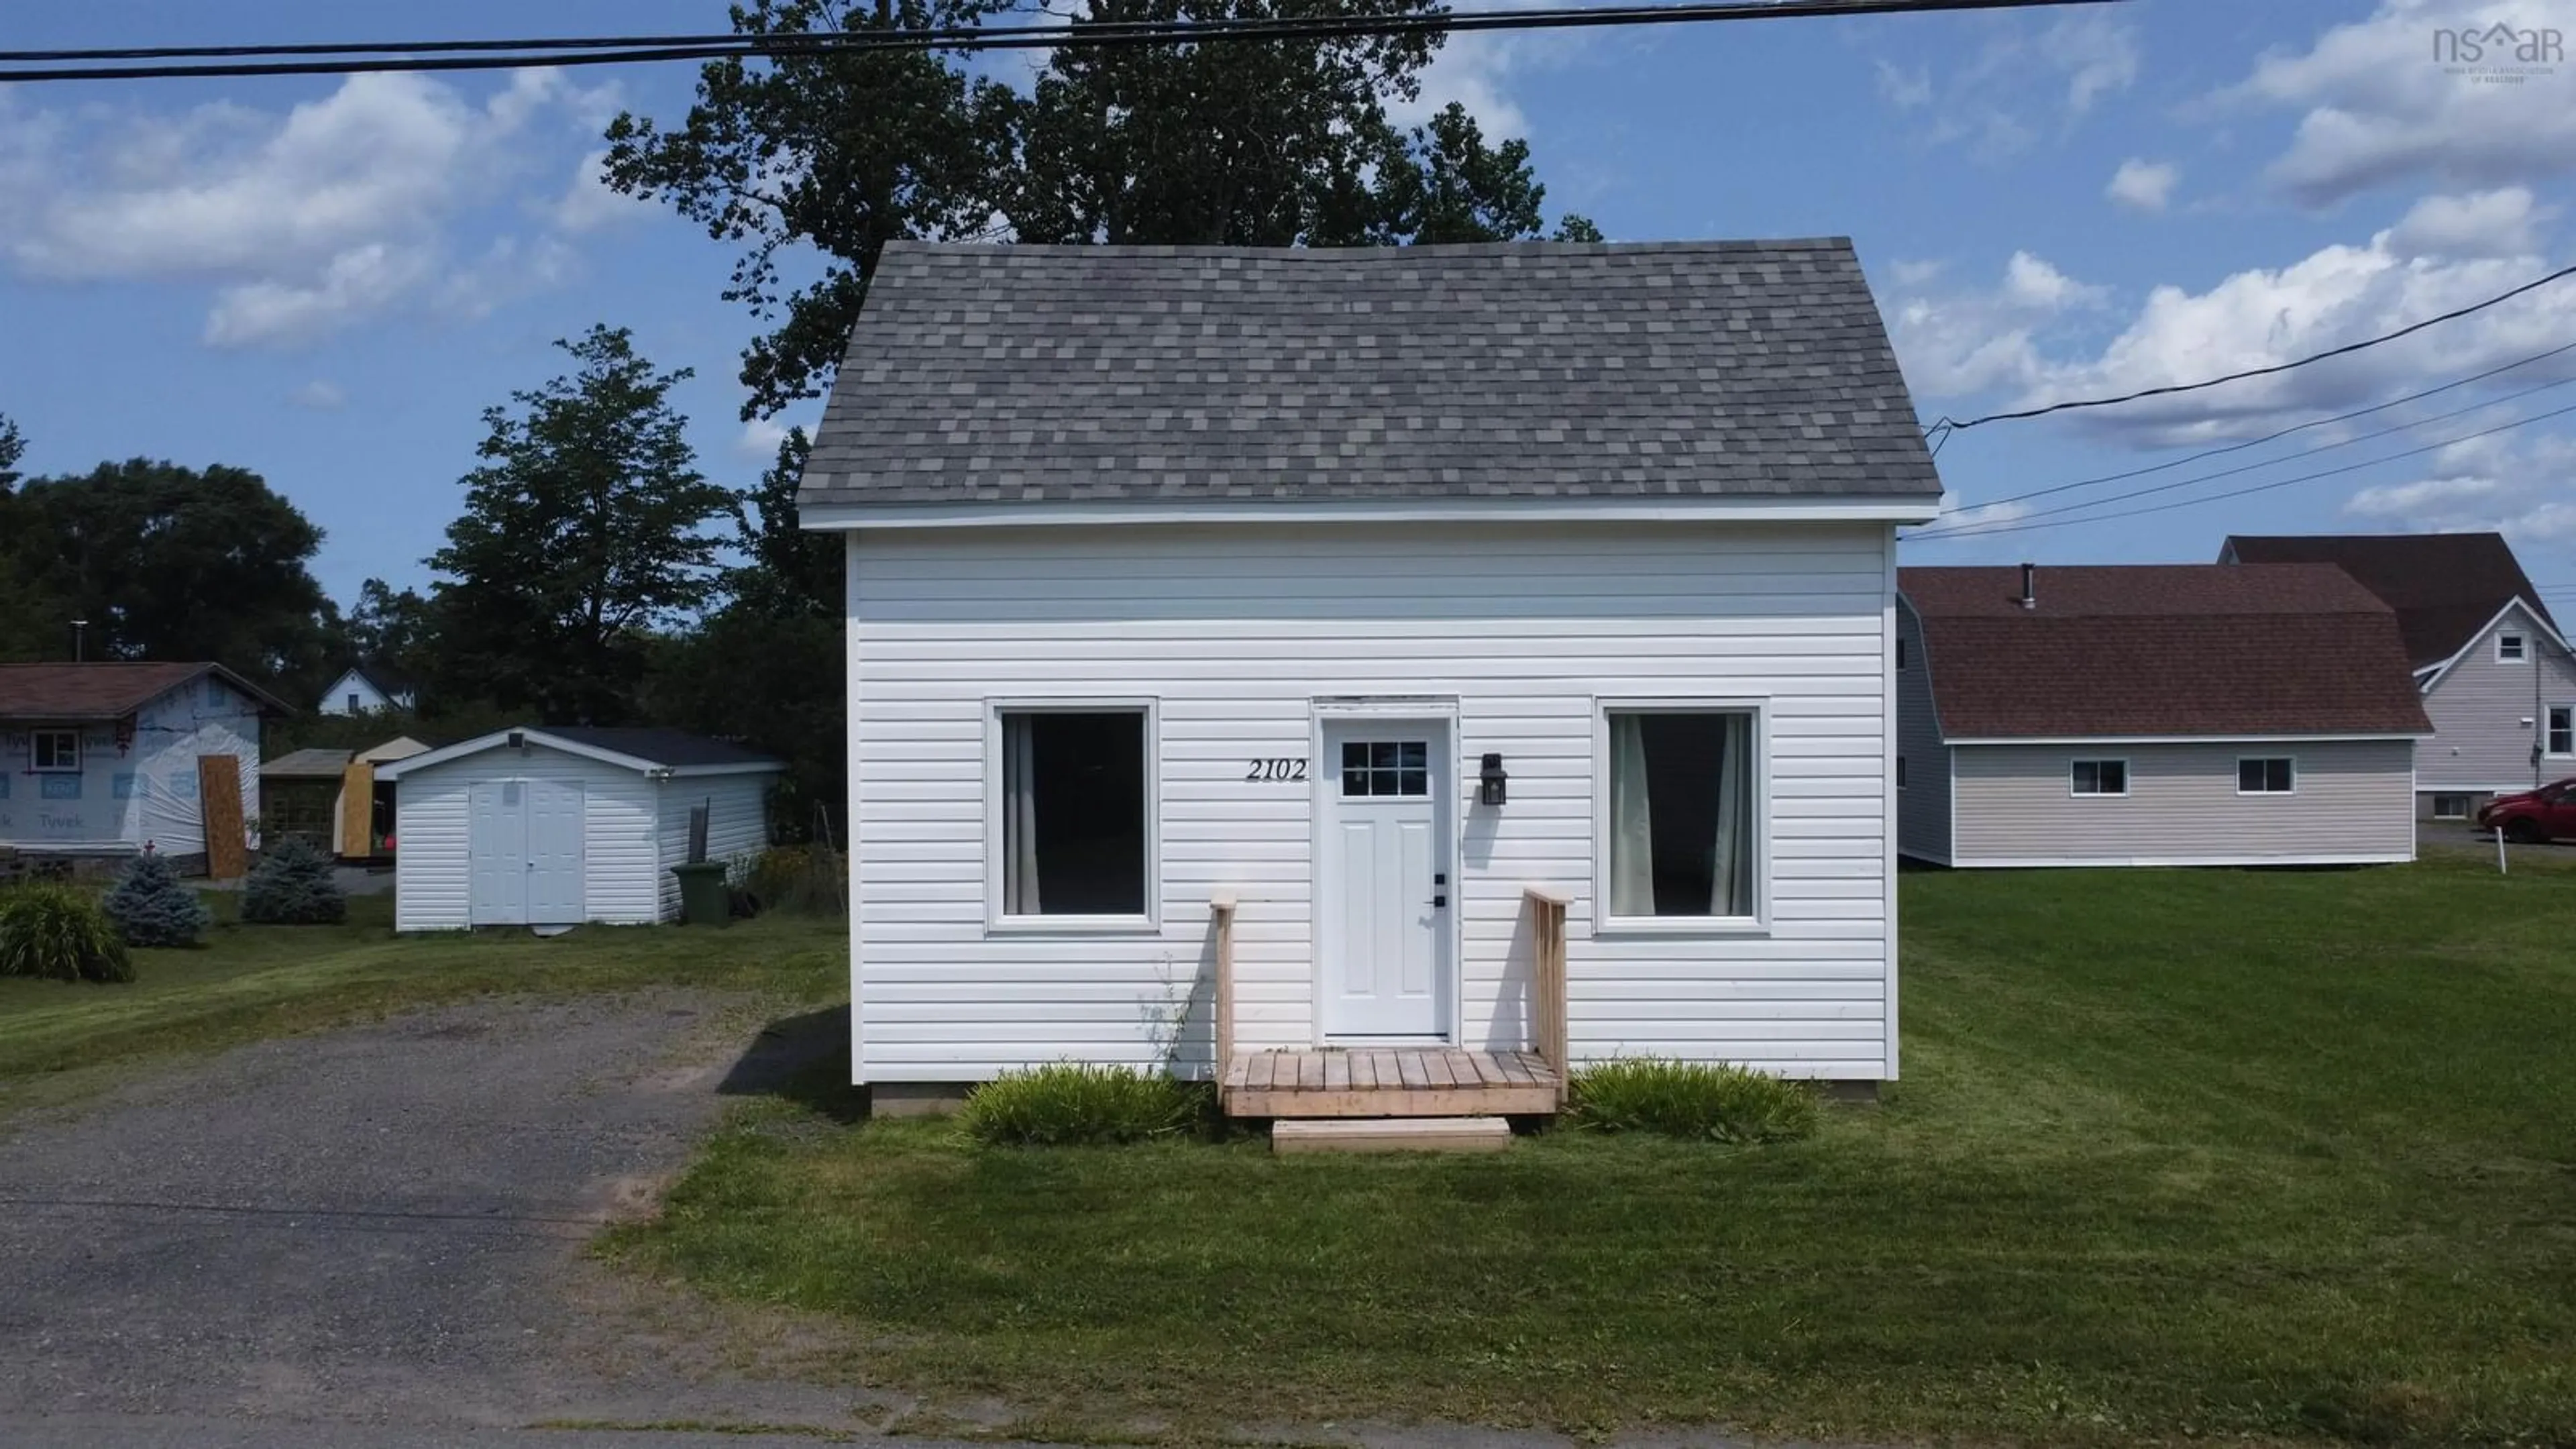 Cottage for 2102 Diamond St, Westville Nova Scotia B0K 2A0